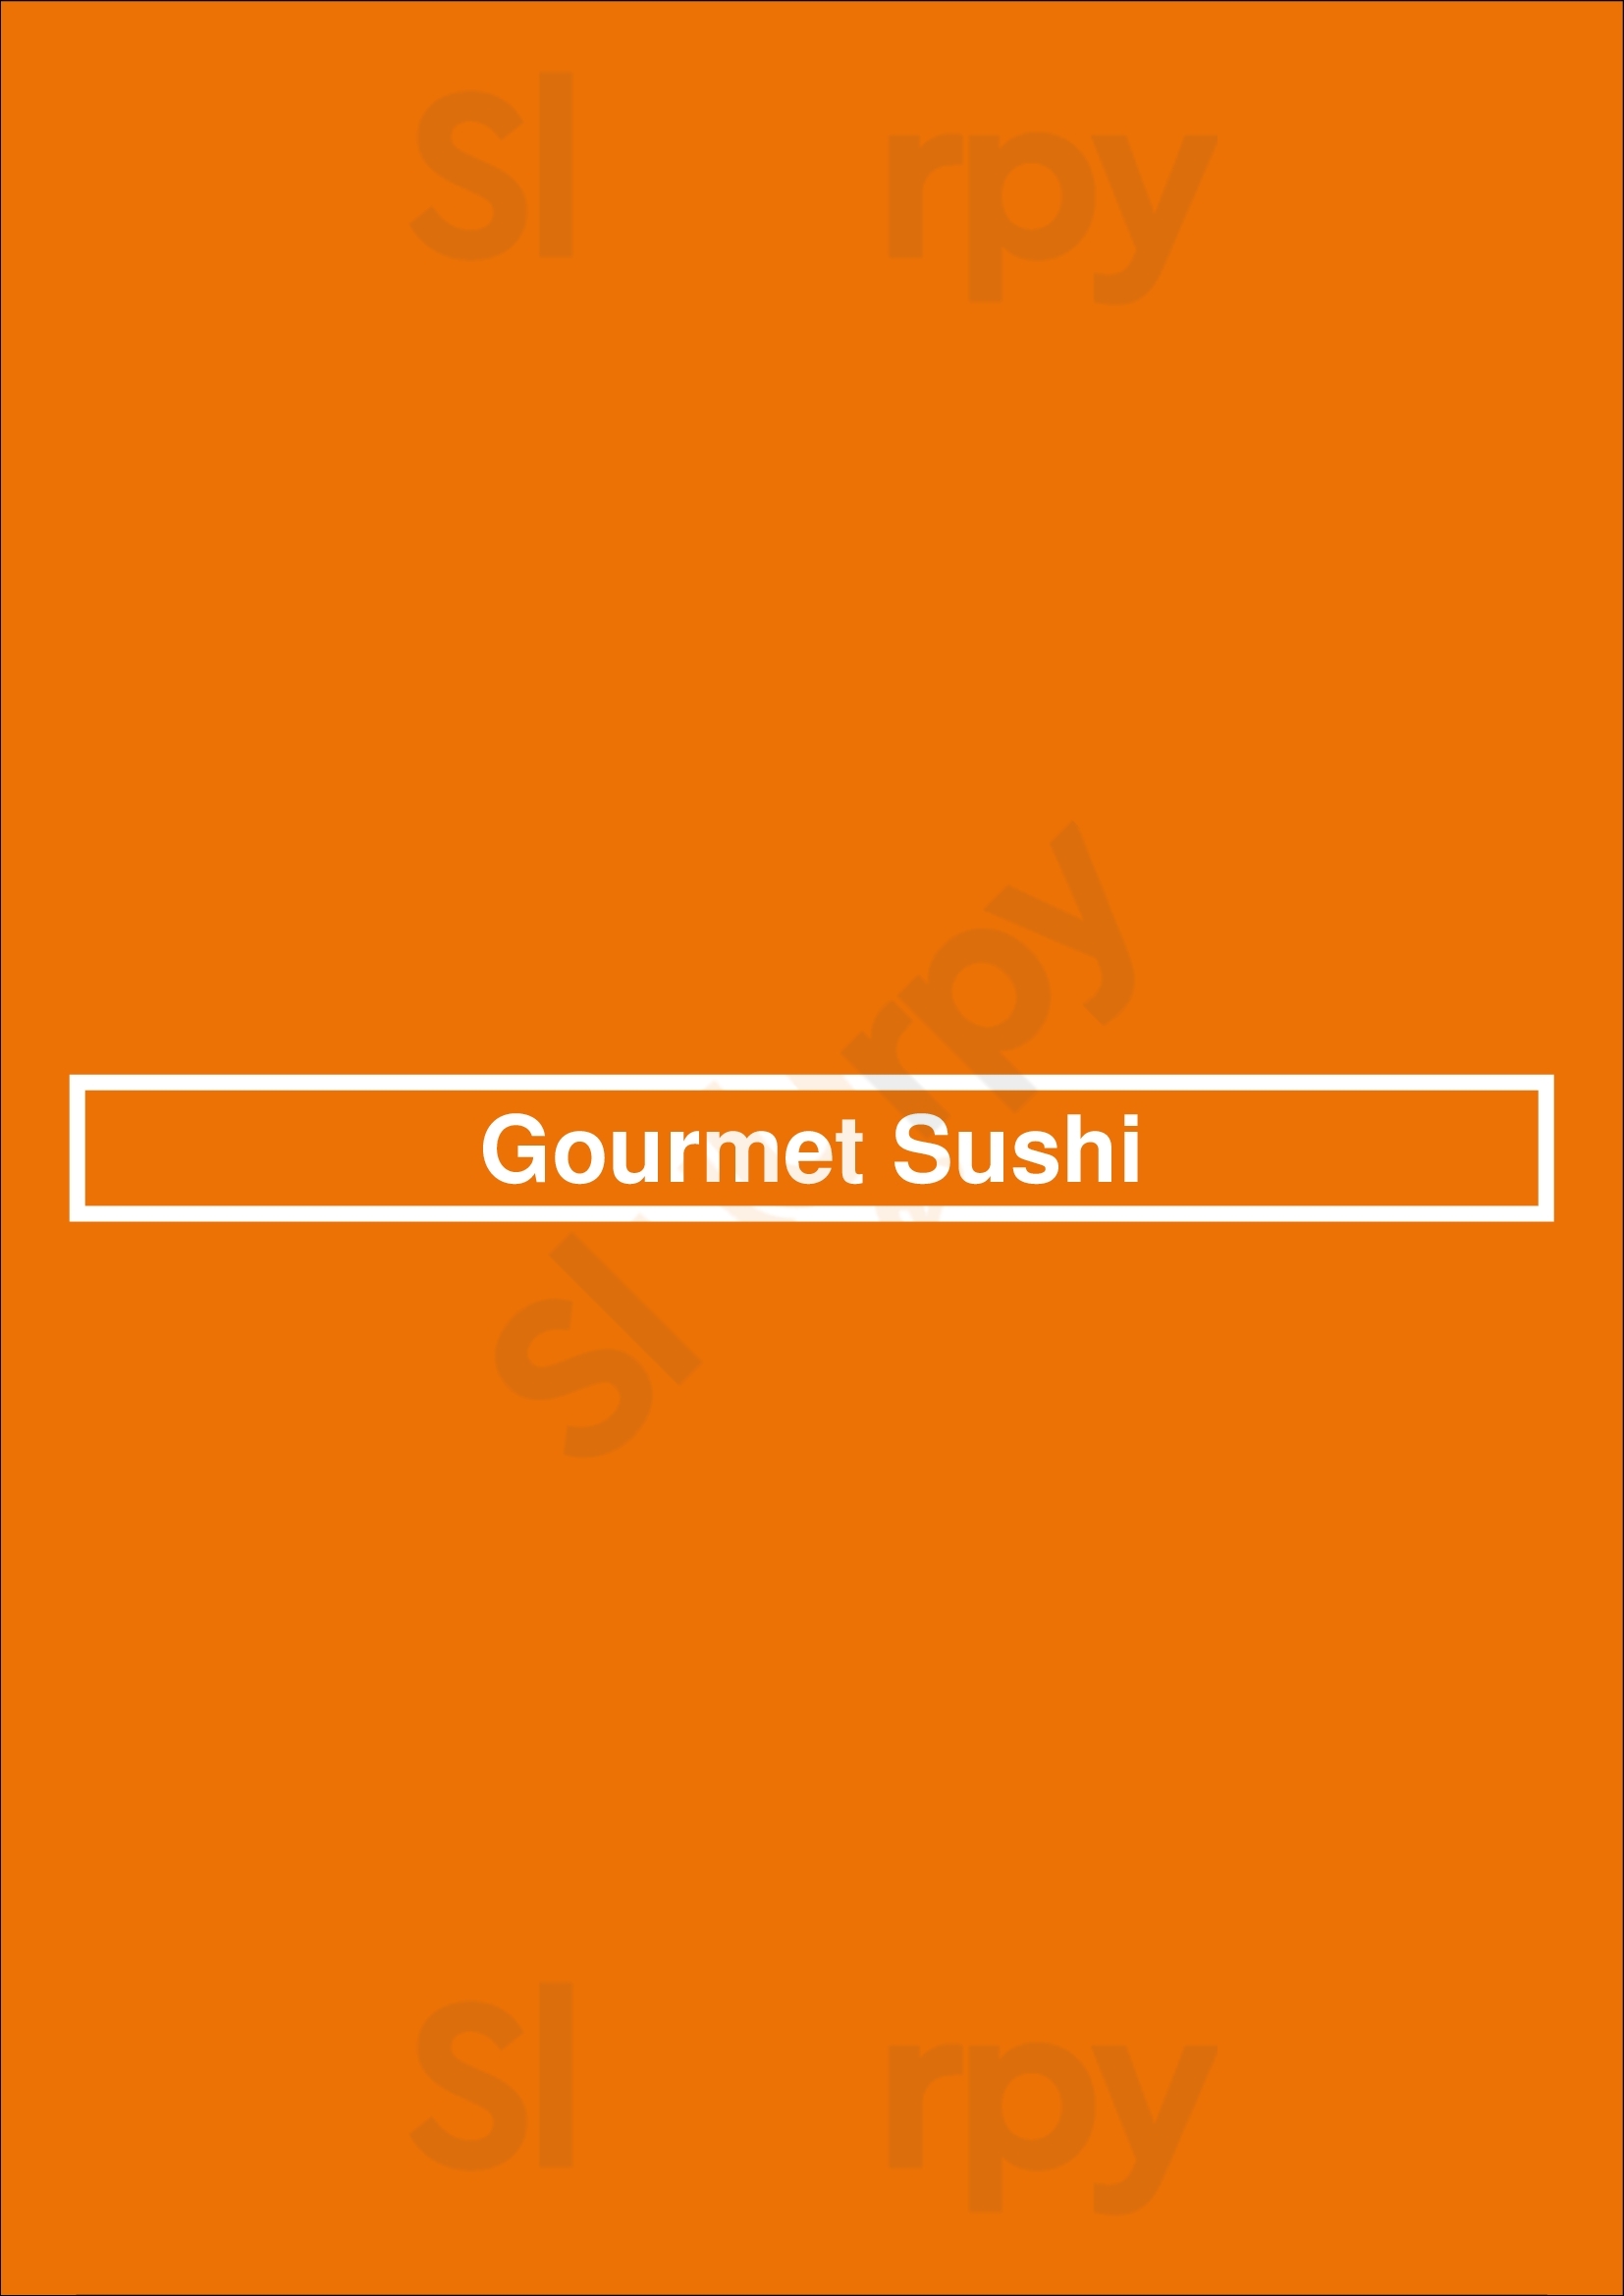 Gourmet Sushi London Menu - 1